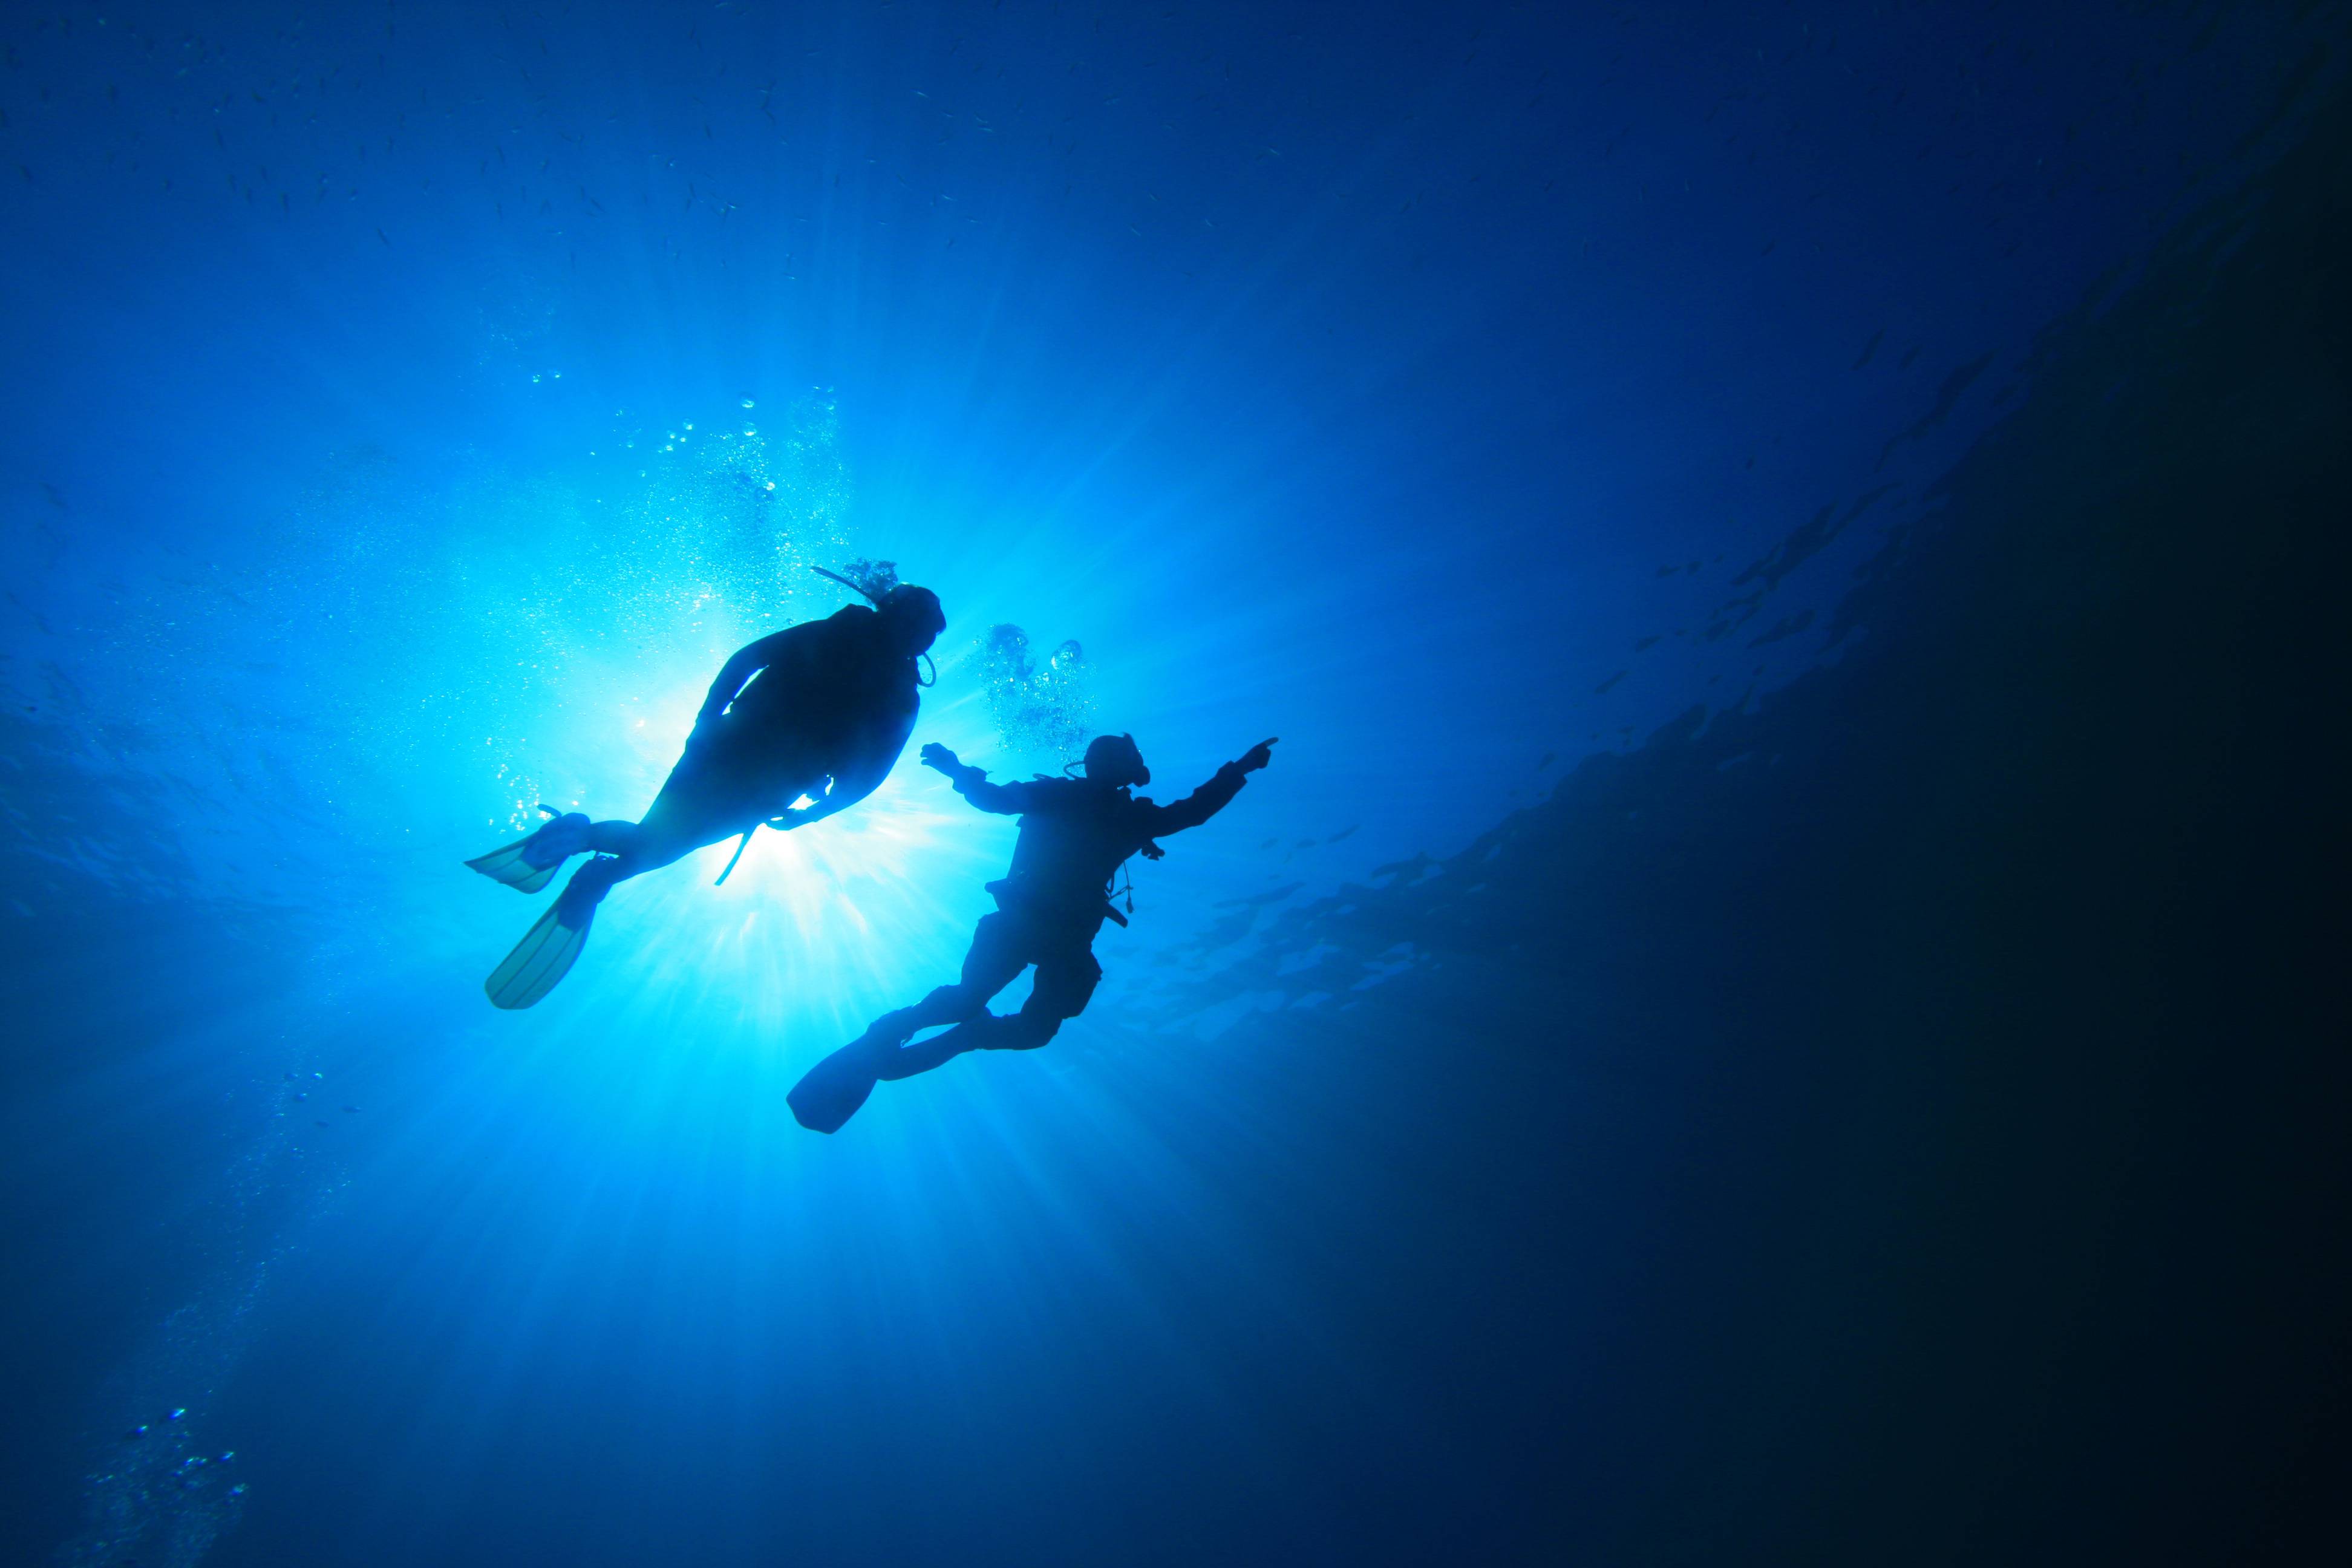 Diving Wallpaper. Top HDQ Diving Image, Wallpaper